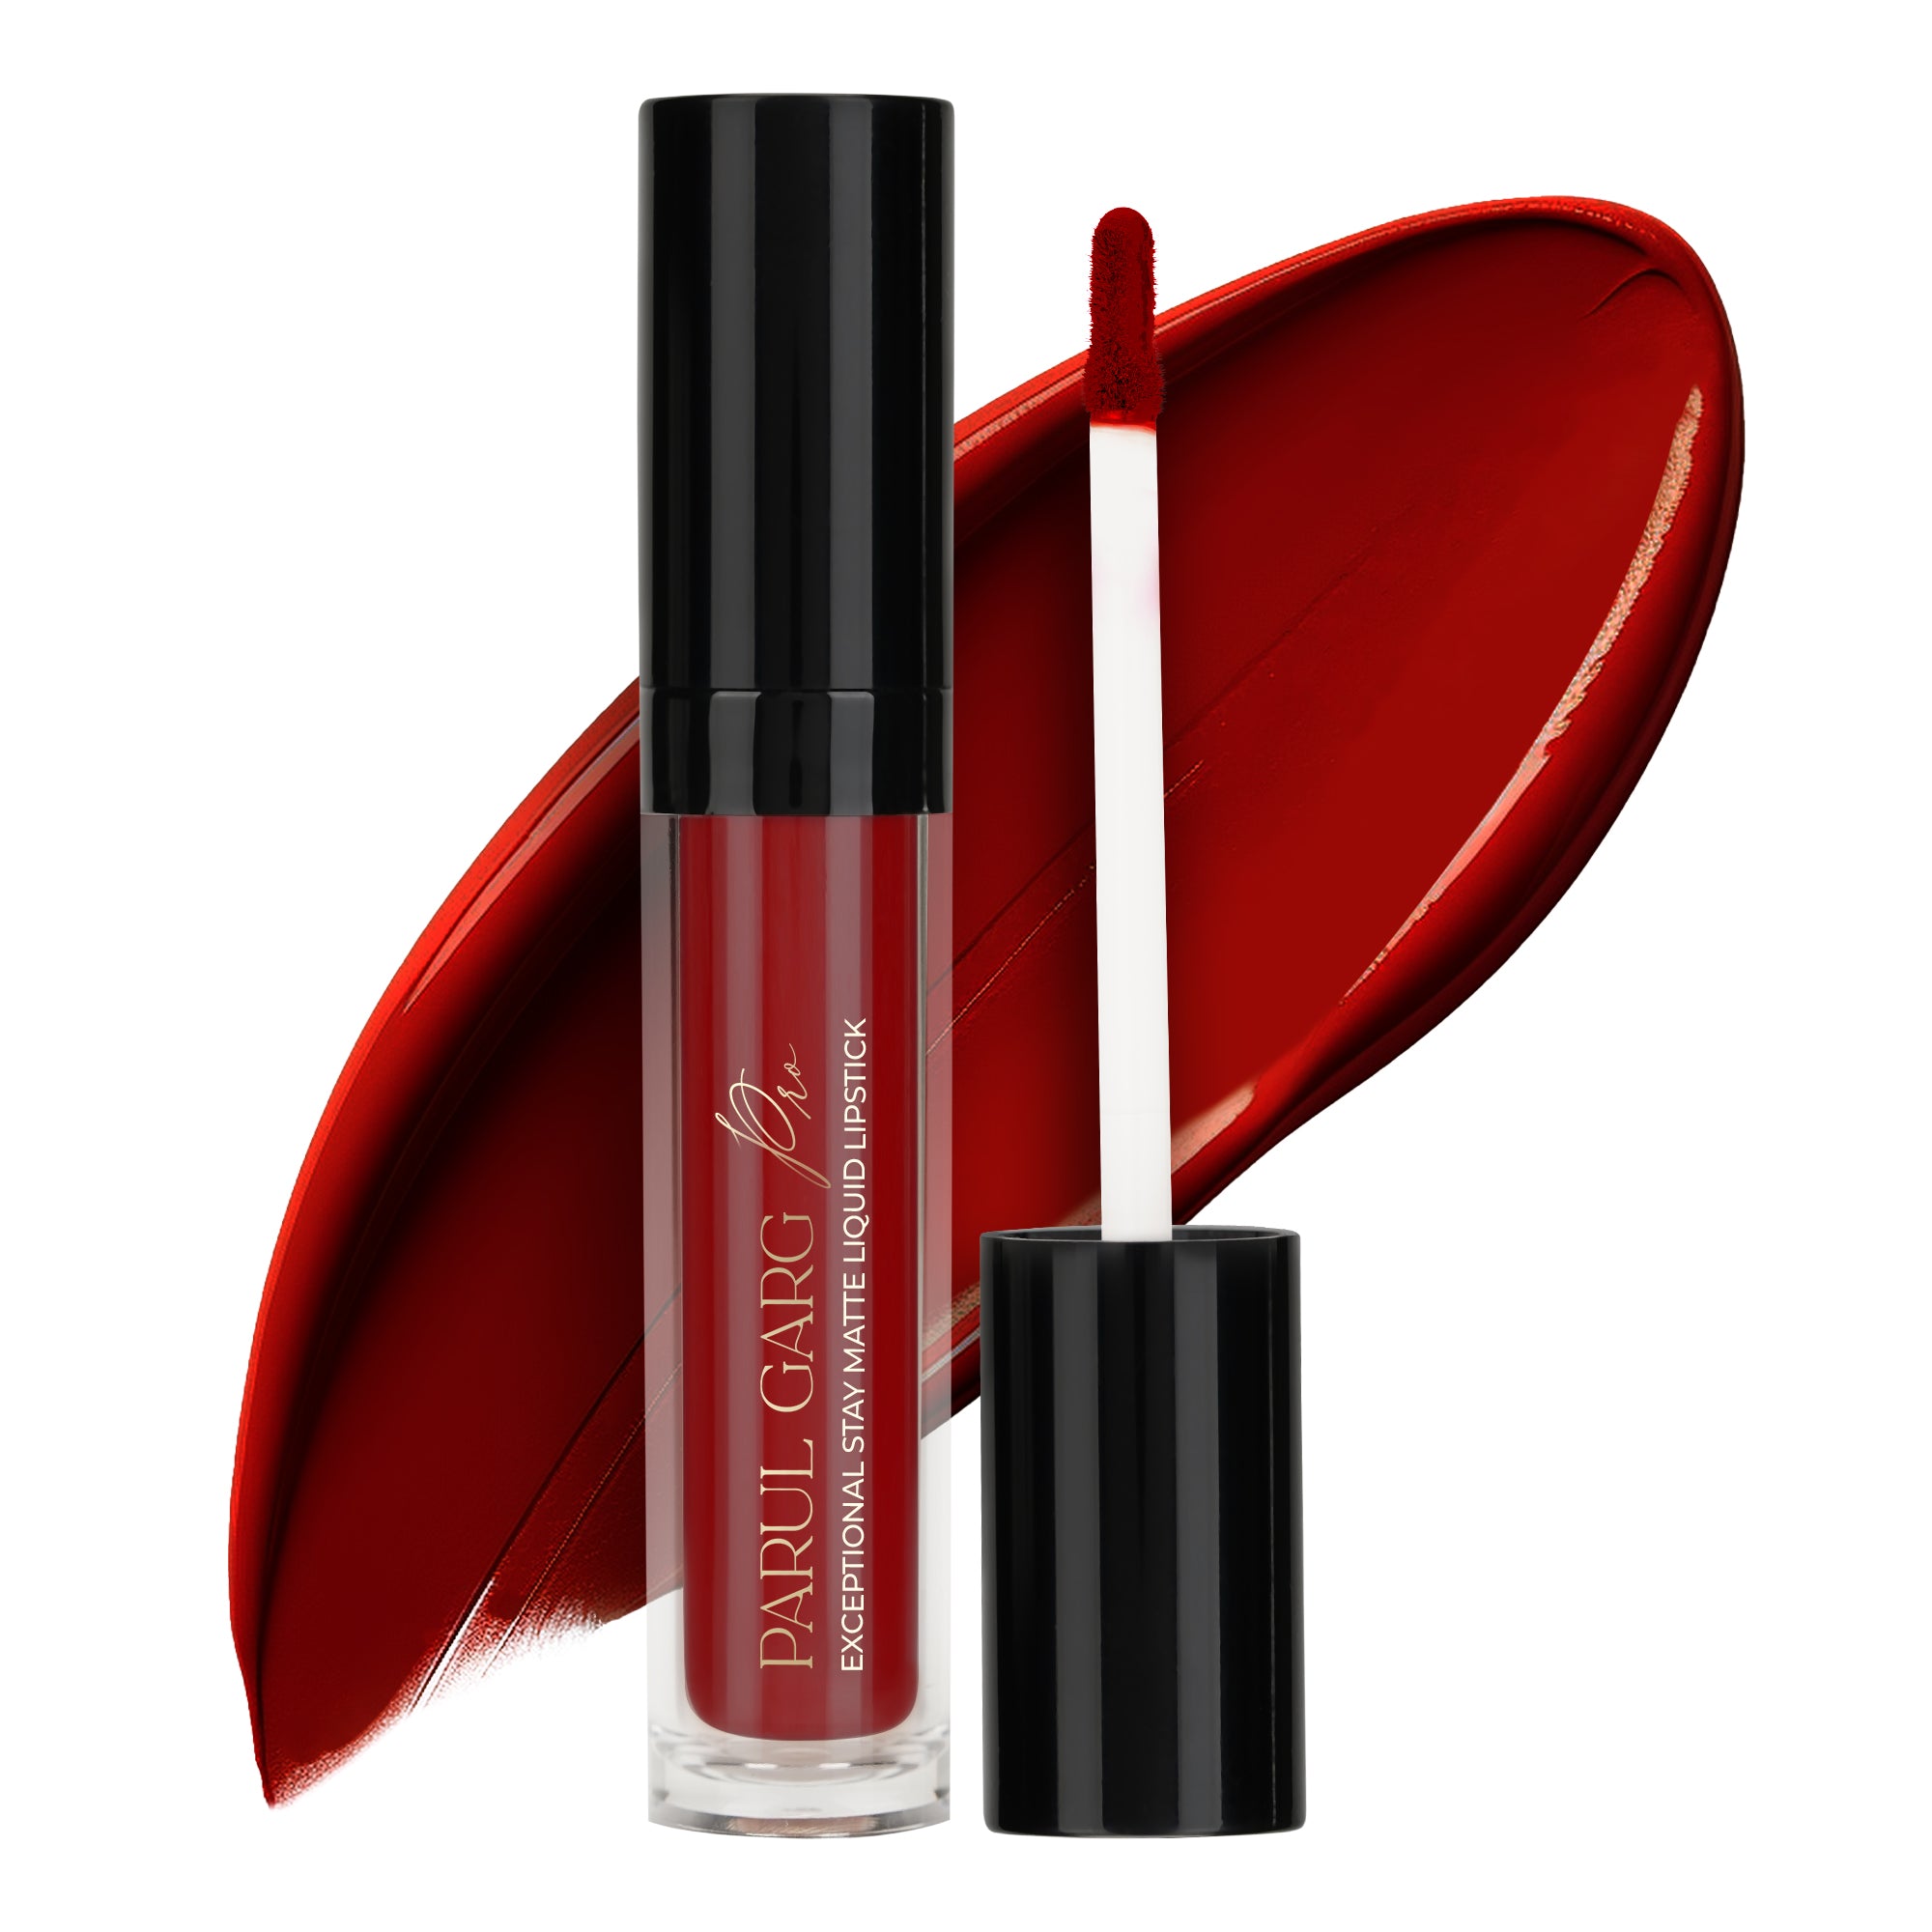 Exceptional Stay Matte Liquid Lipstick Shade: Hibiscus 01